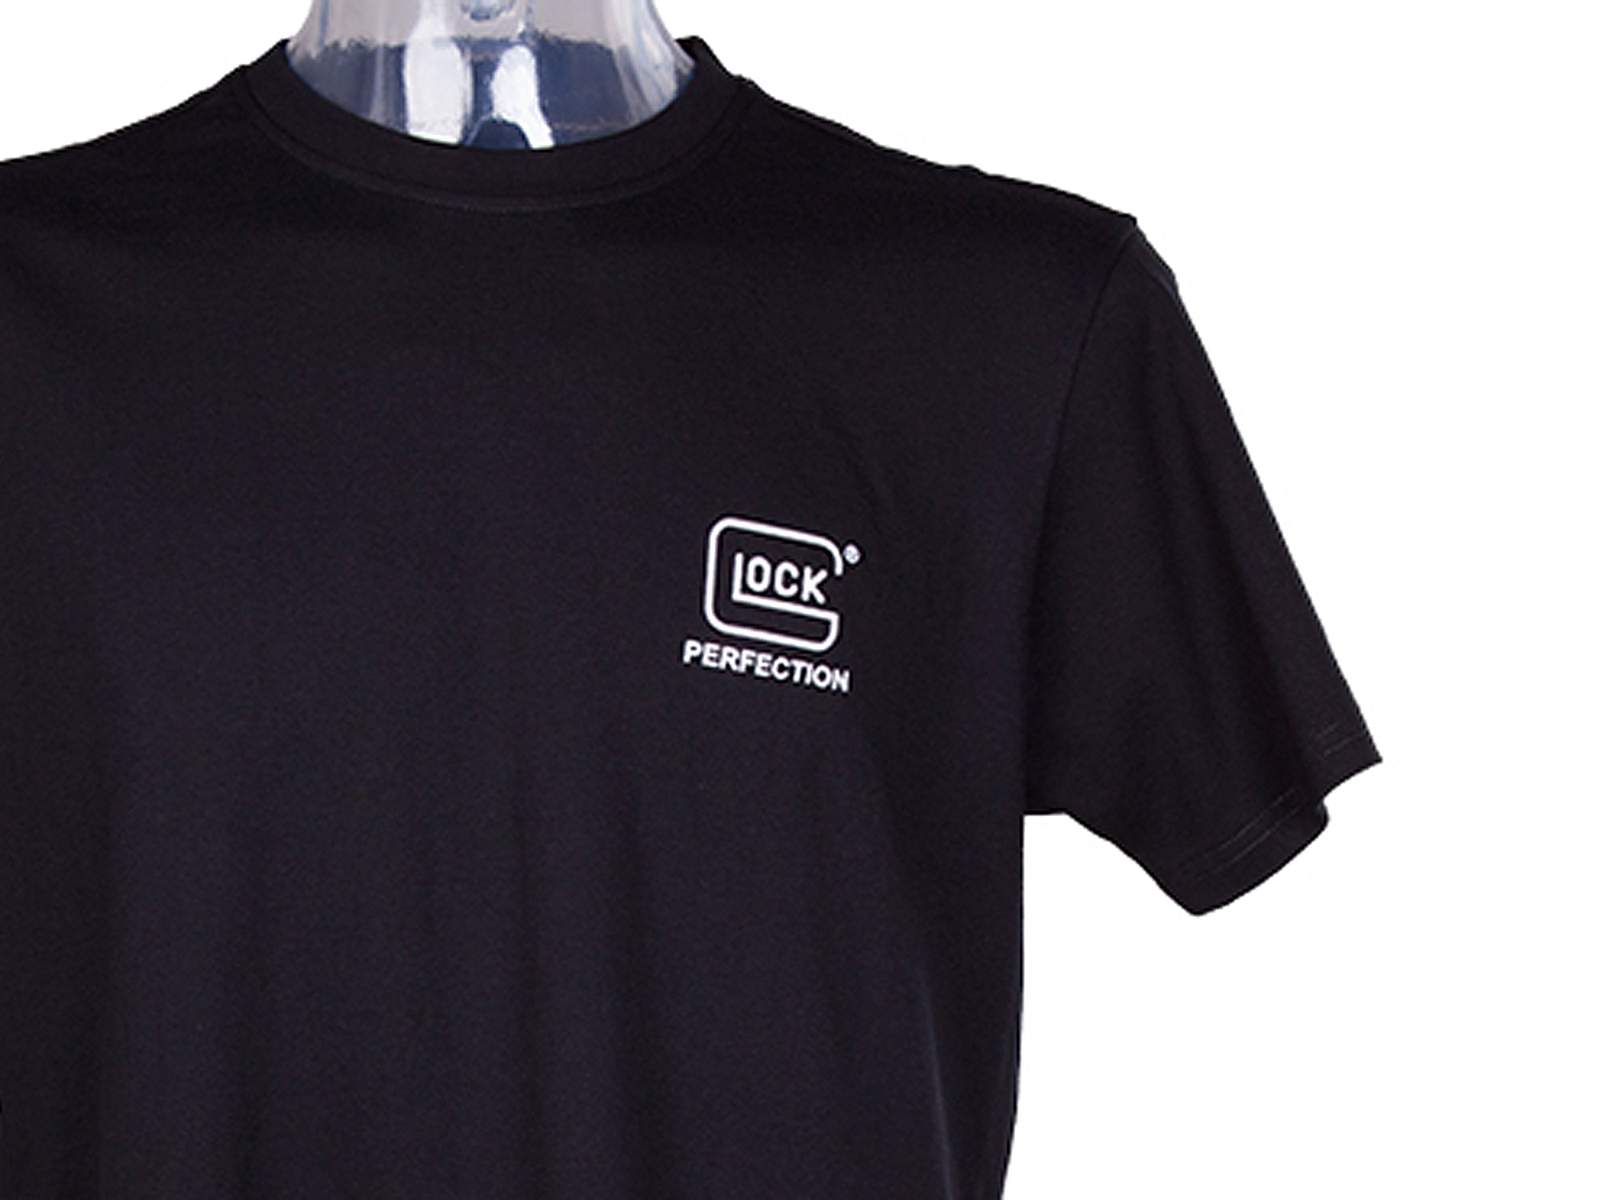 GLOCK APPAREL/SHIRT GLOCK Perfection Tシャツ Black (size M)